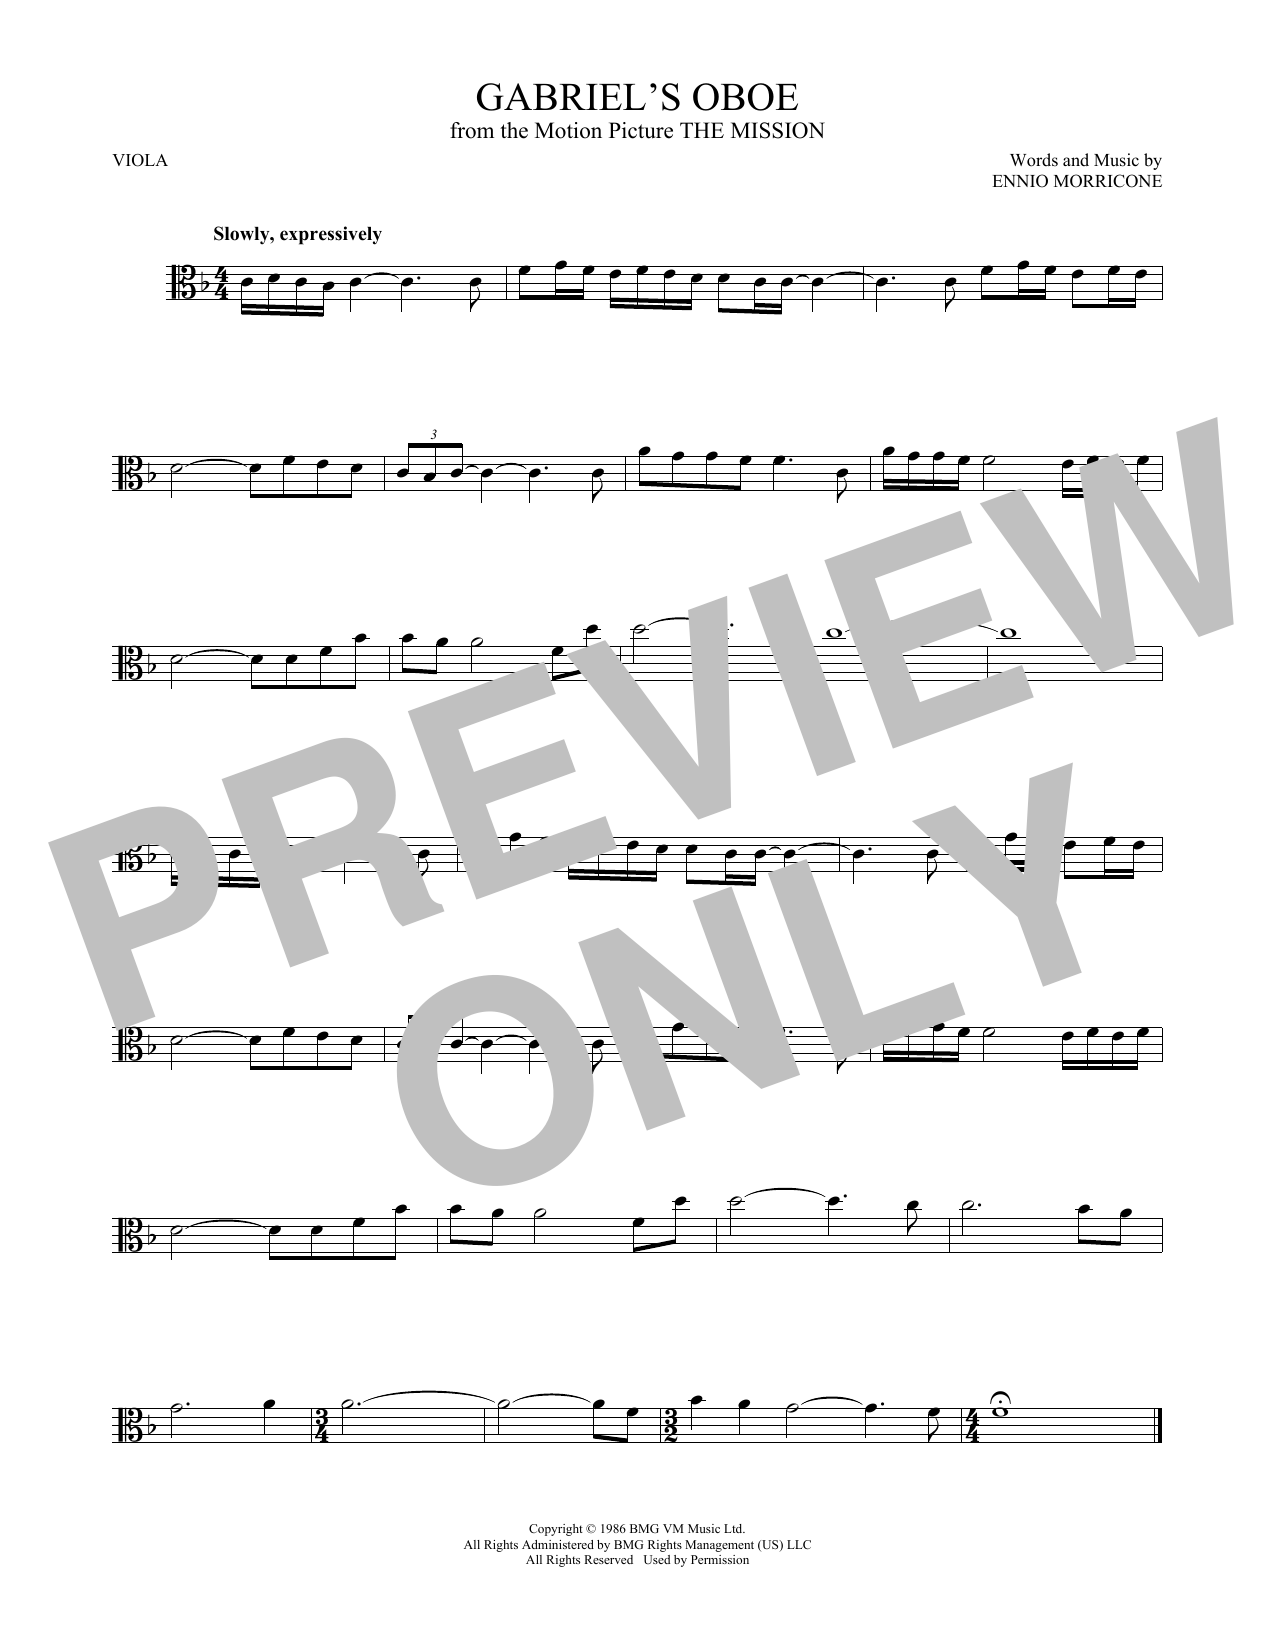 Ennio Morricone Gabriel's Oboe Sheet Music Notes & Chords for Viola Solo - Download or Print PDF